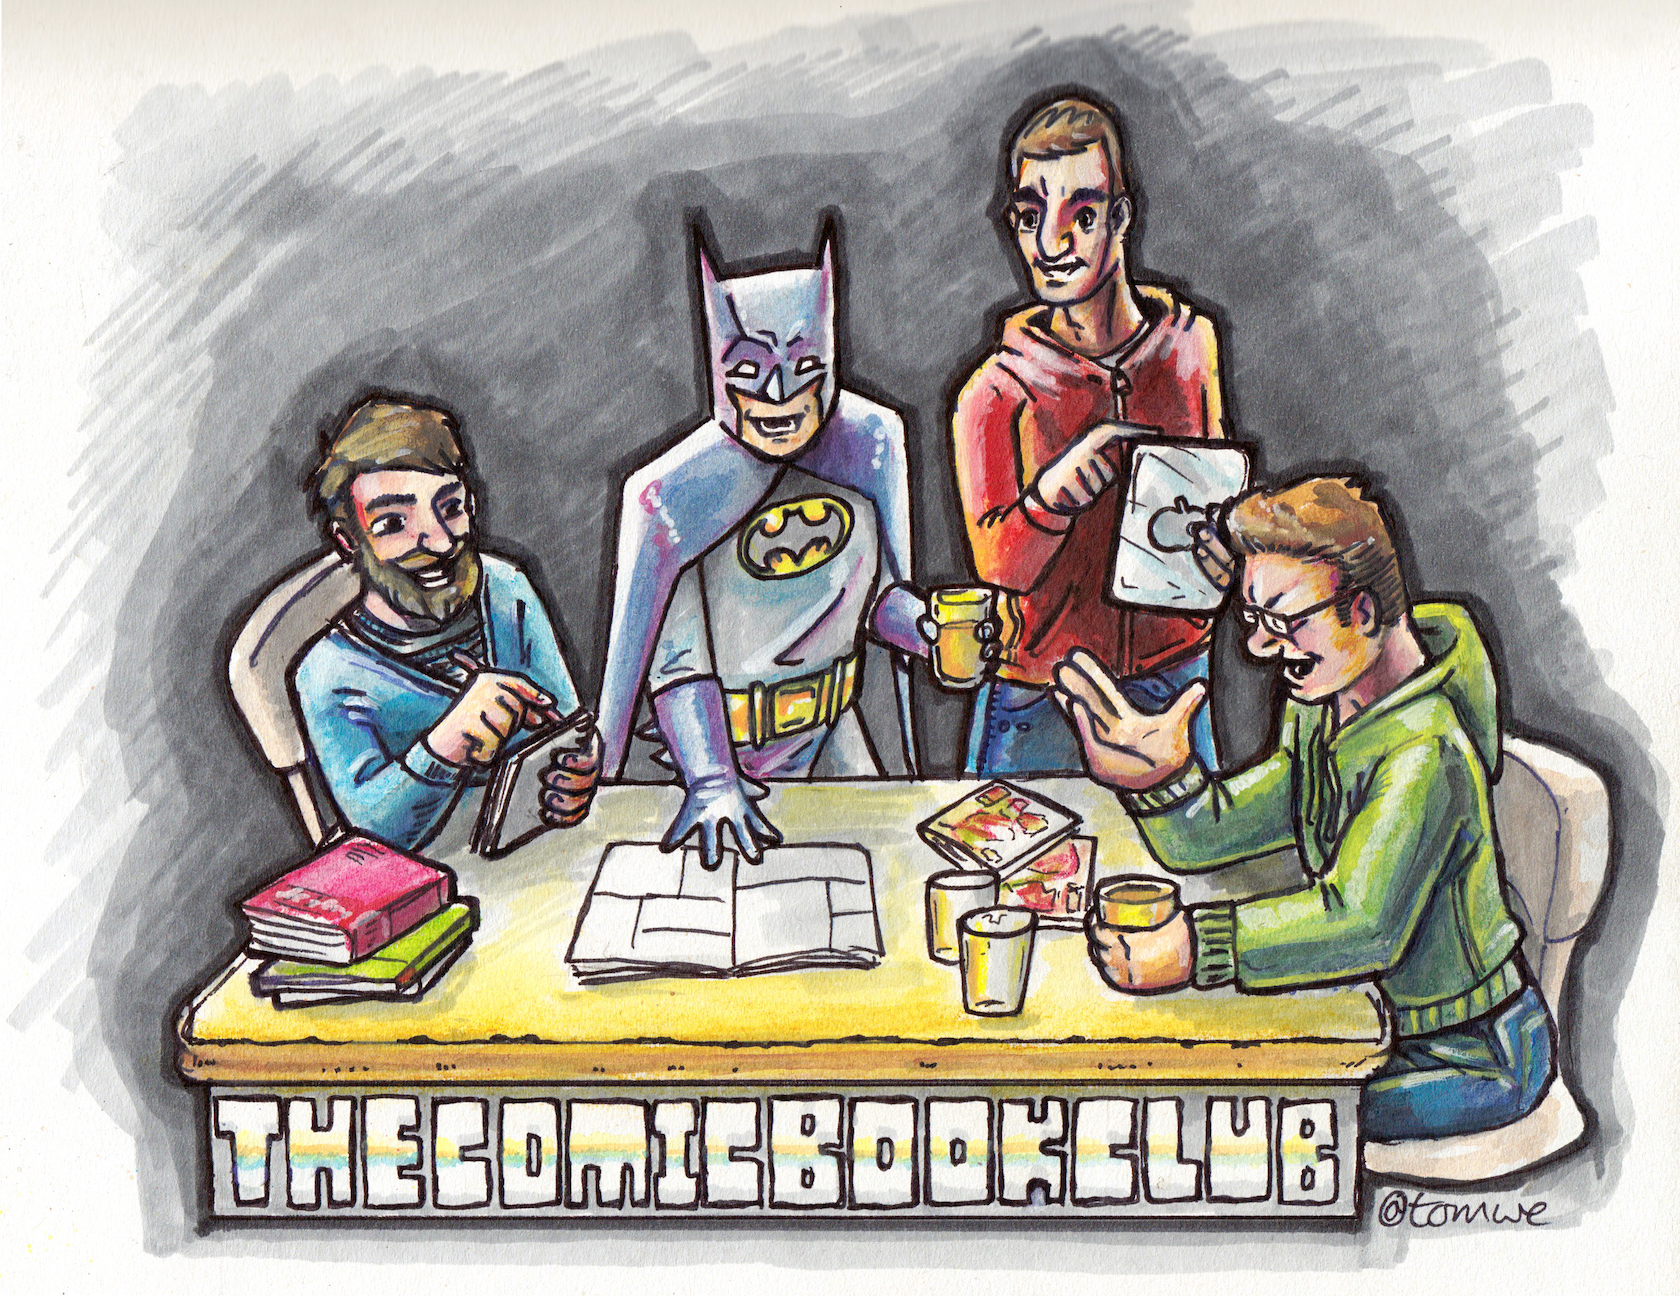 The Comic Book Club meetups